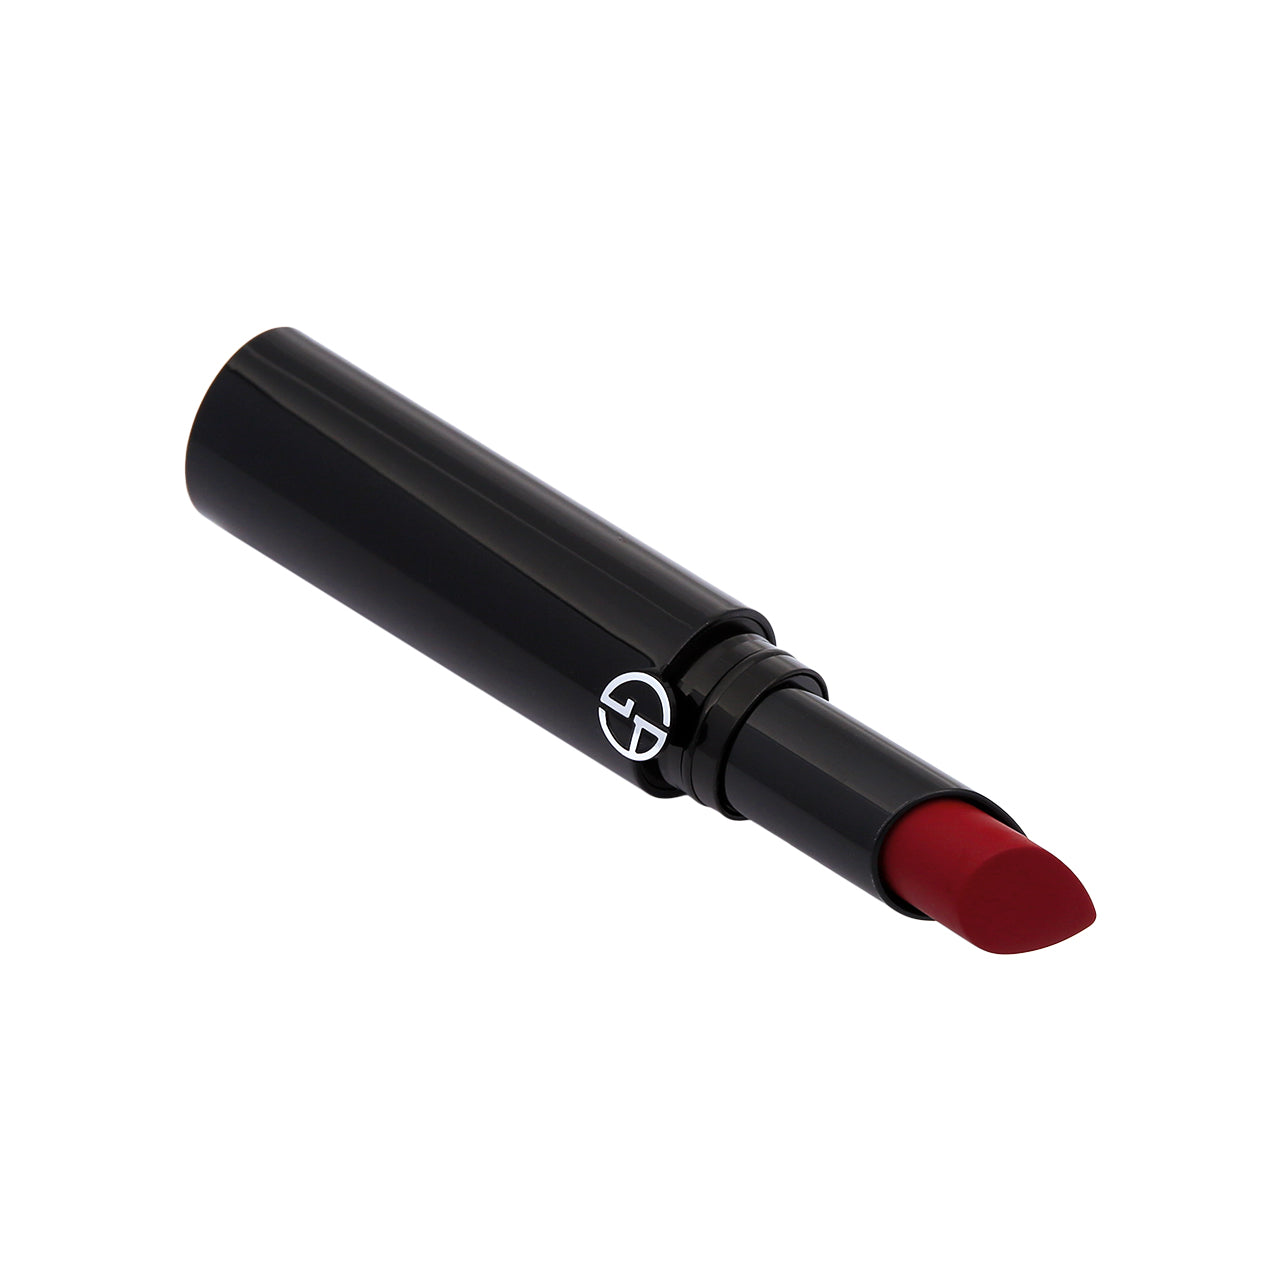 Giorgio Armani Lip Power Longwear Vivid Color Lipstick 1pc | Sasa Global eShop